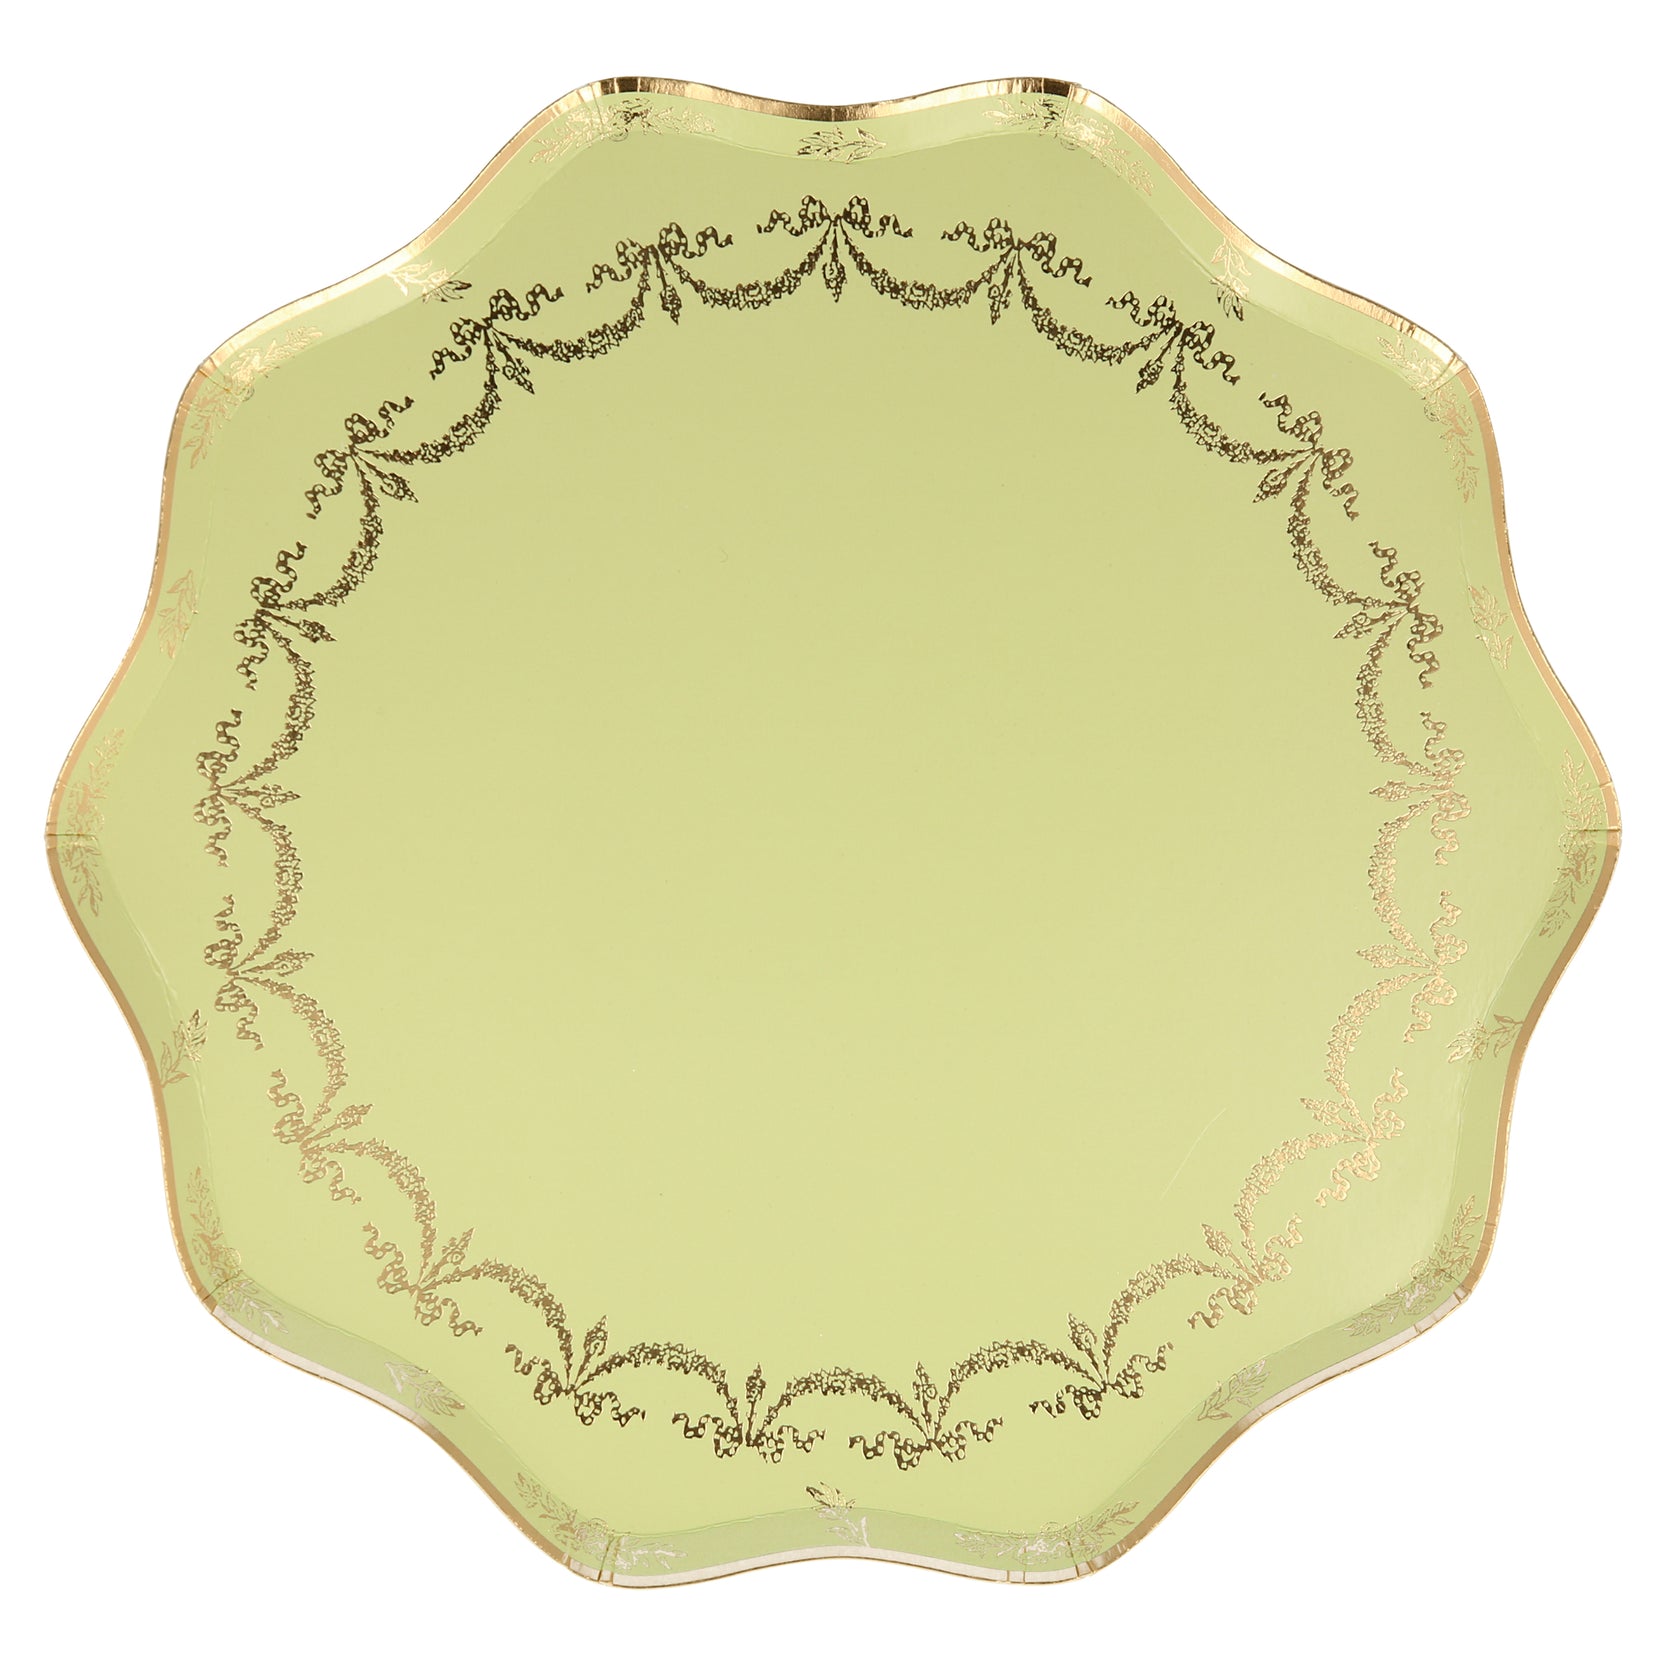 An ornate Ladurée Paris Paper Plate with gold trim, perfect for elegant dining, by Meri Meri.